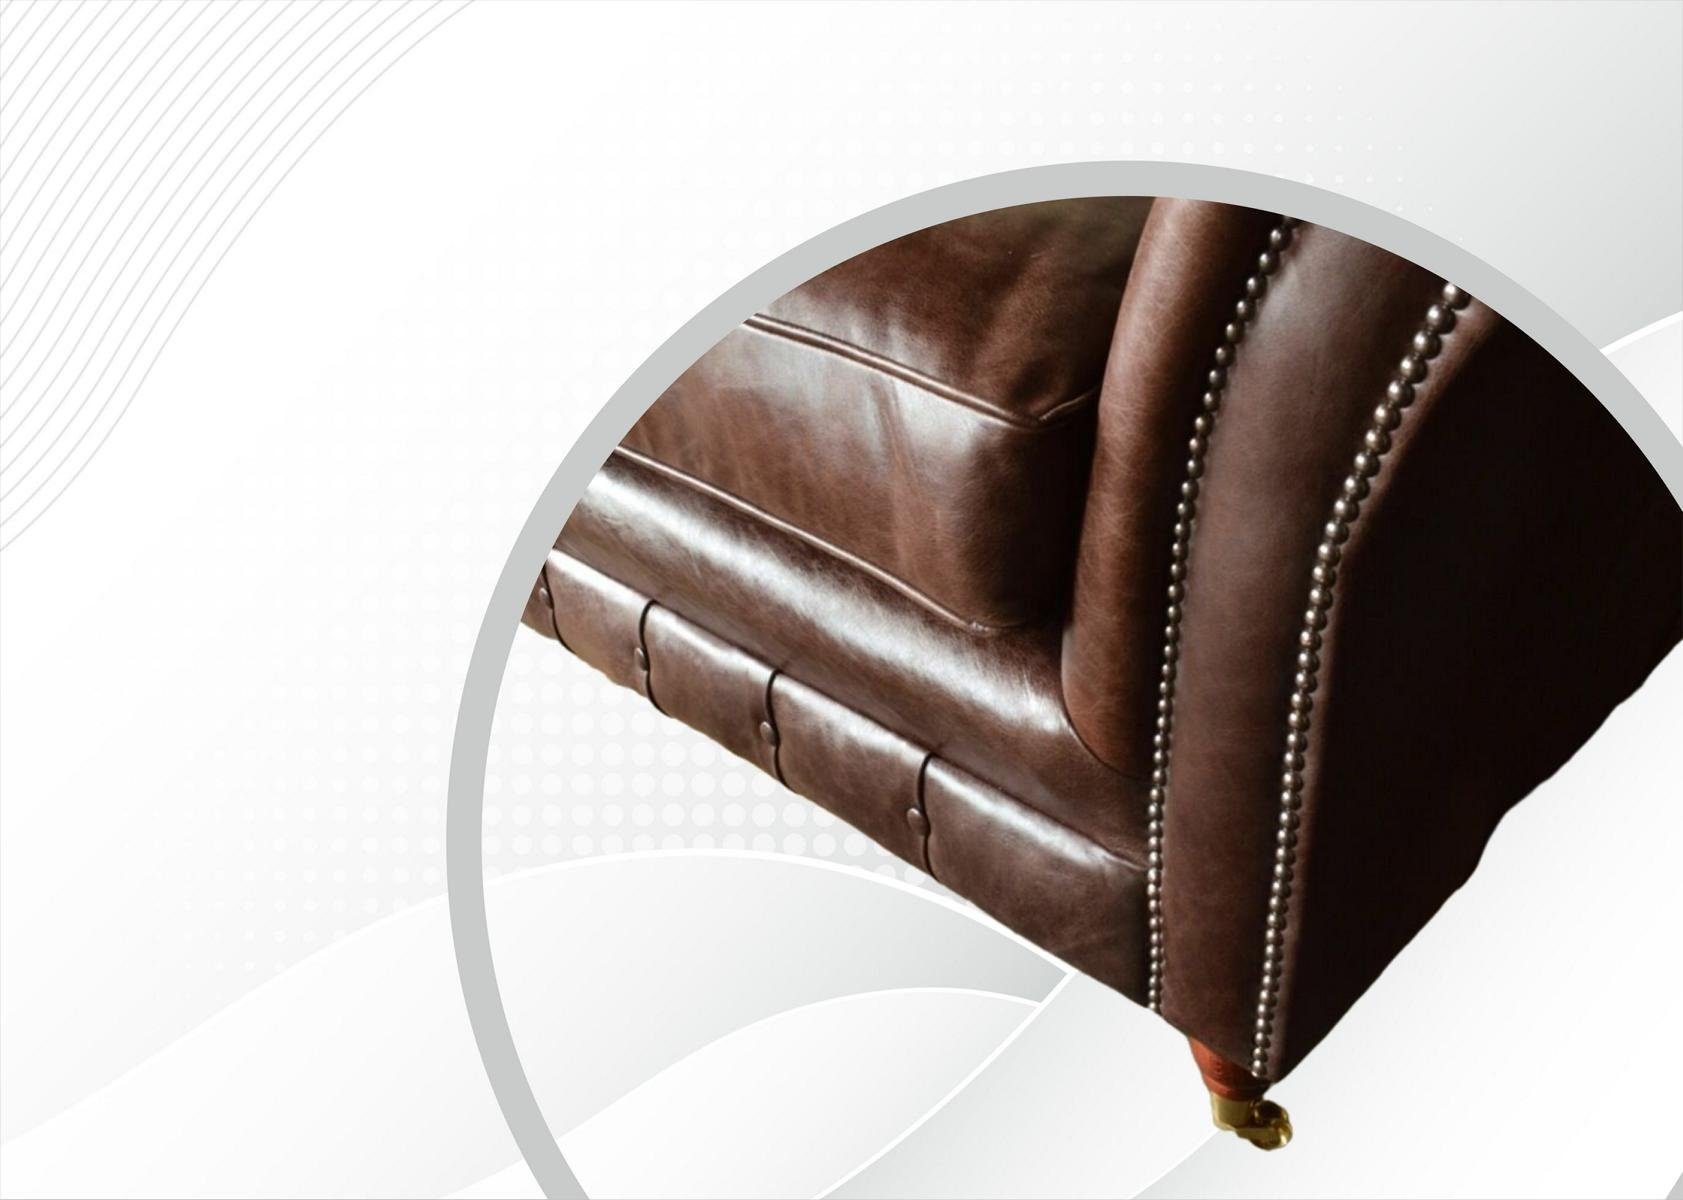 Couch Chesterfield-Sofa, Sofa Design Sitzer 3 Chesterfield cm Sofa 225 JVmoebel